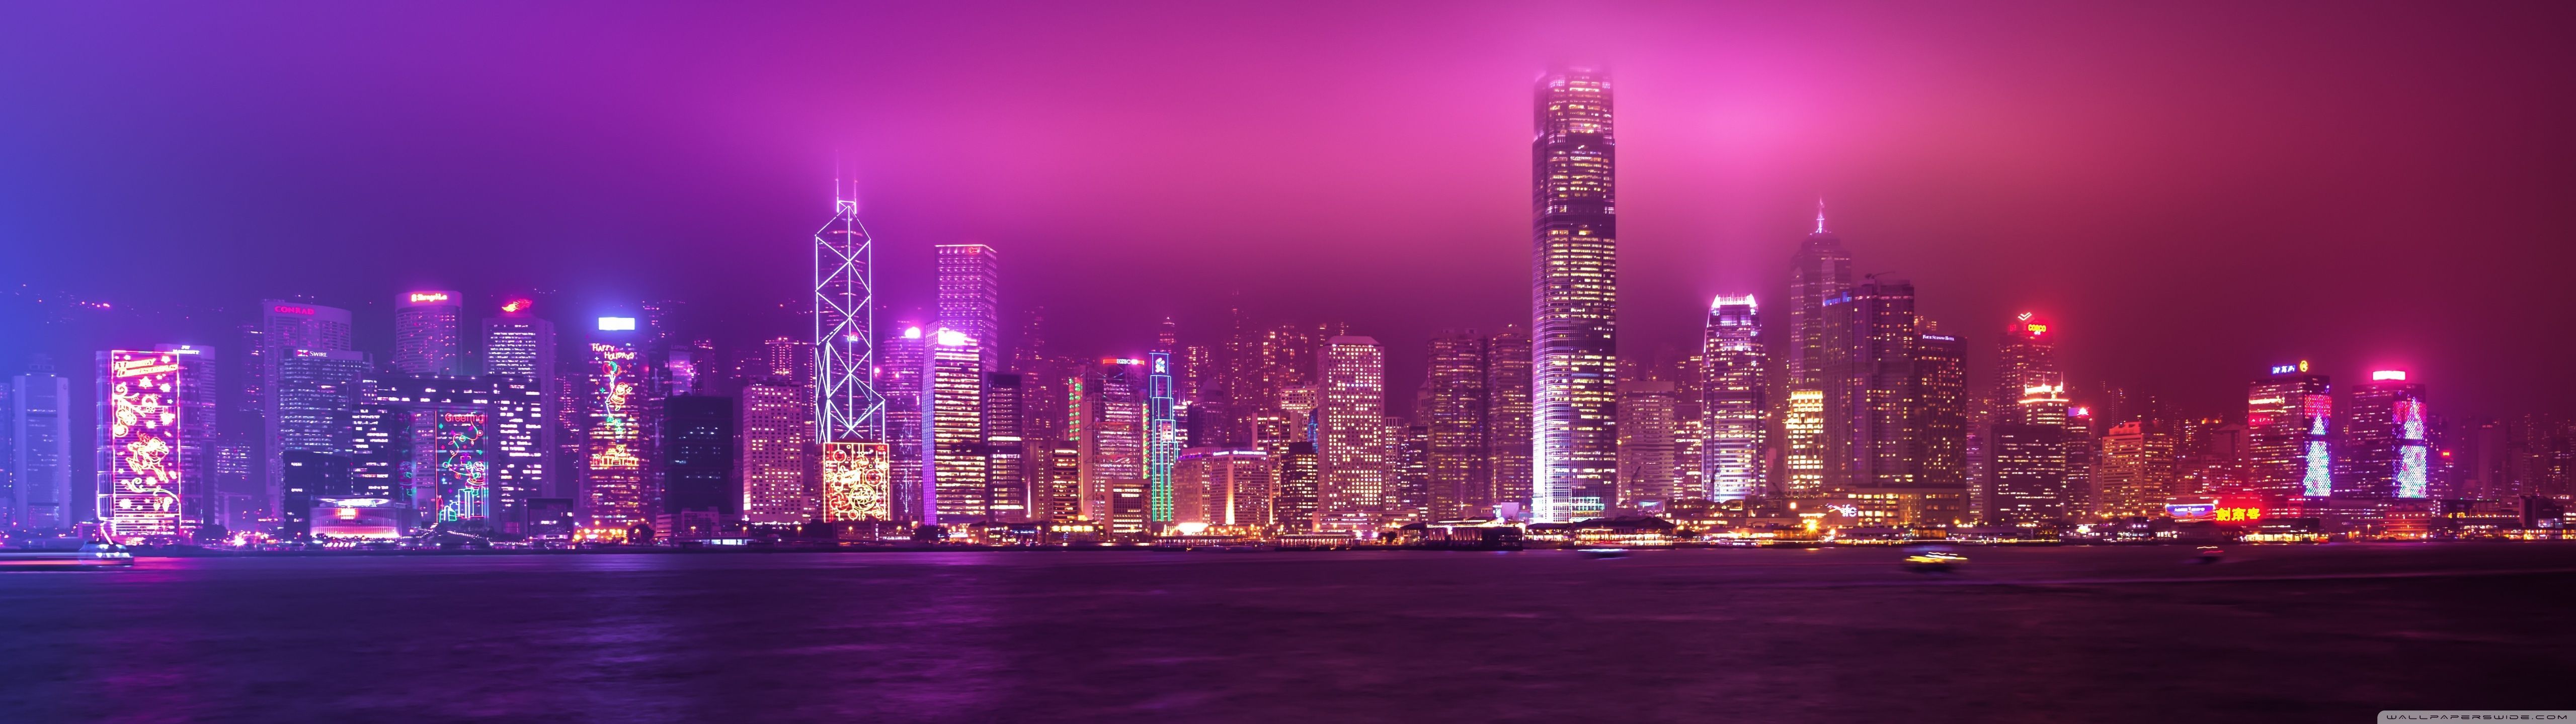 Hong Kong skyline at night with purple and pink hues - 5120x1440